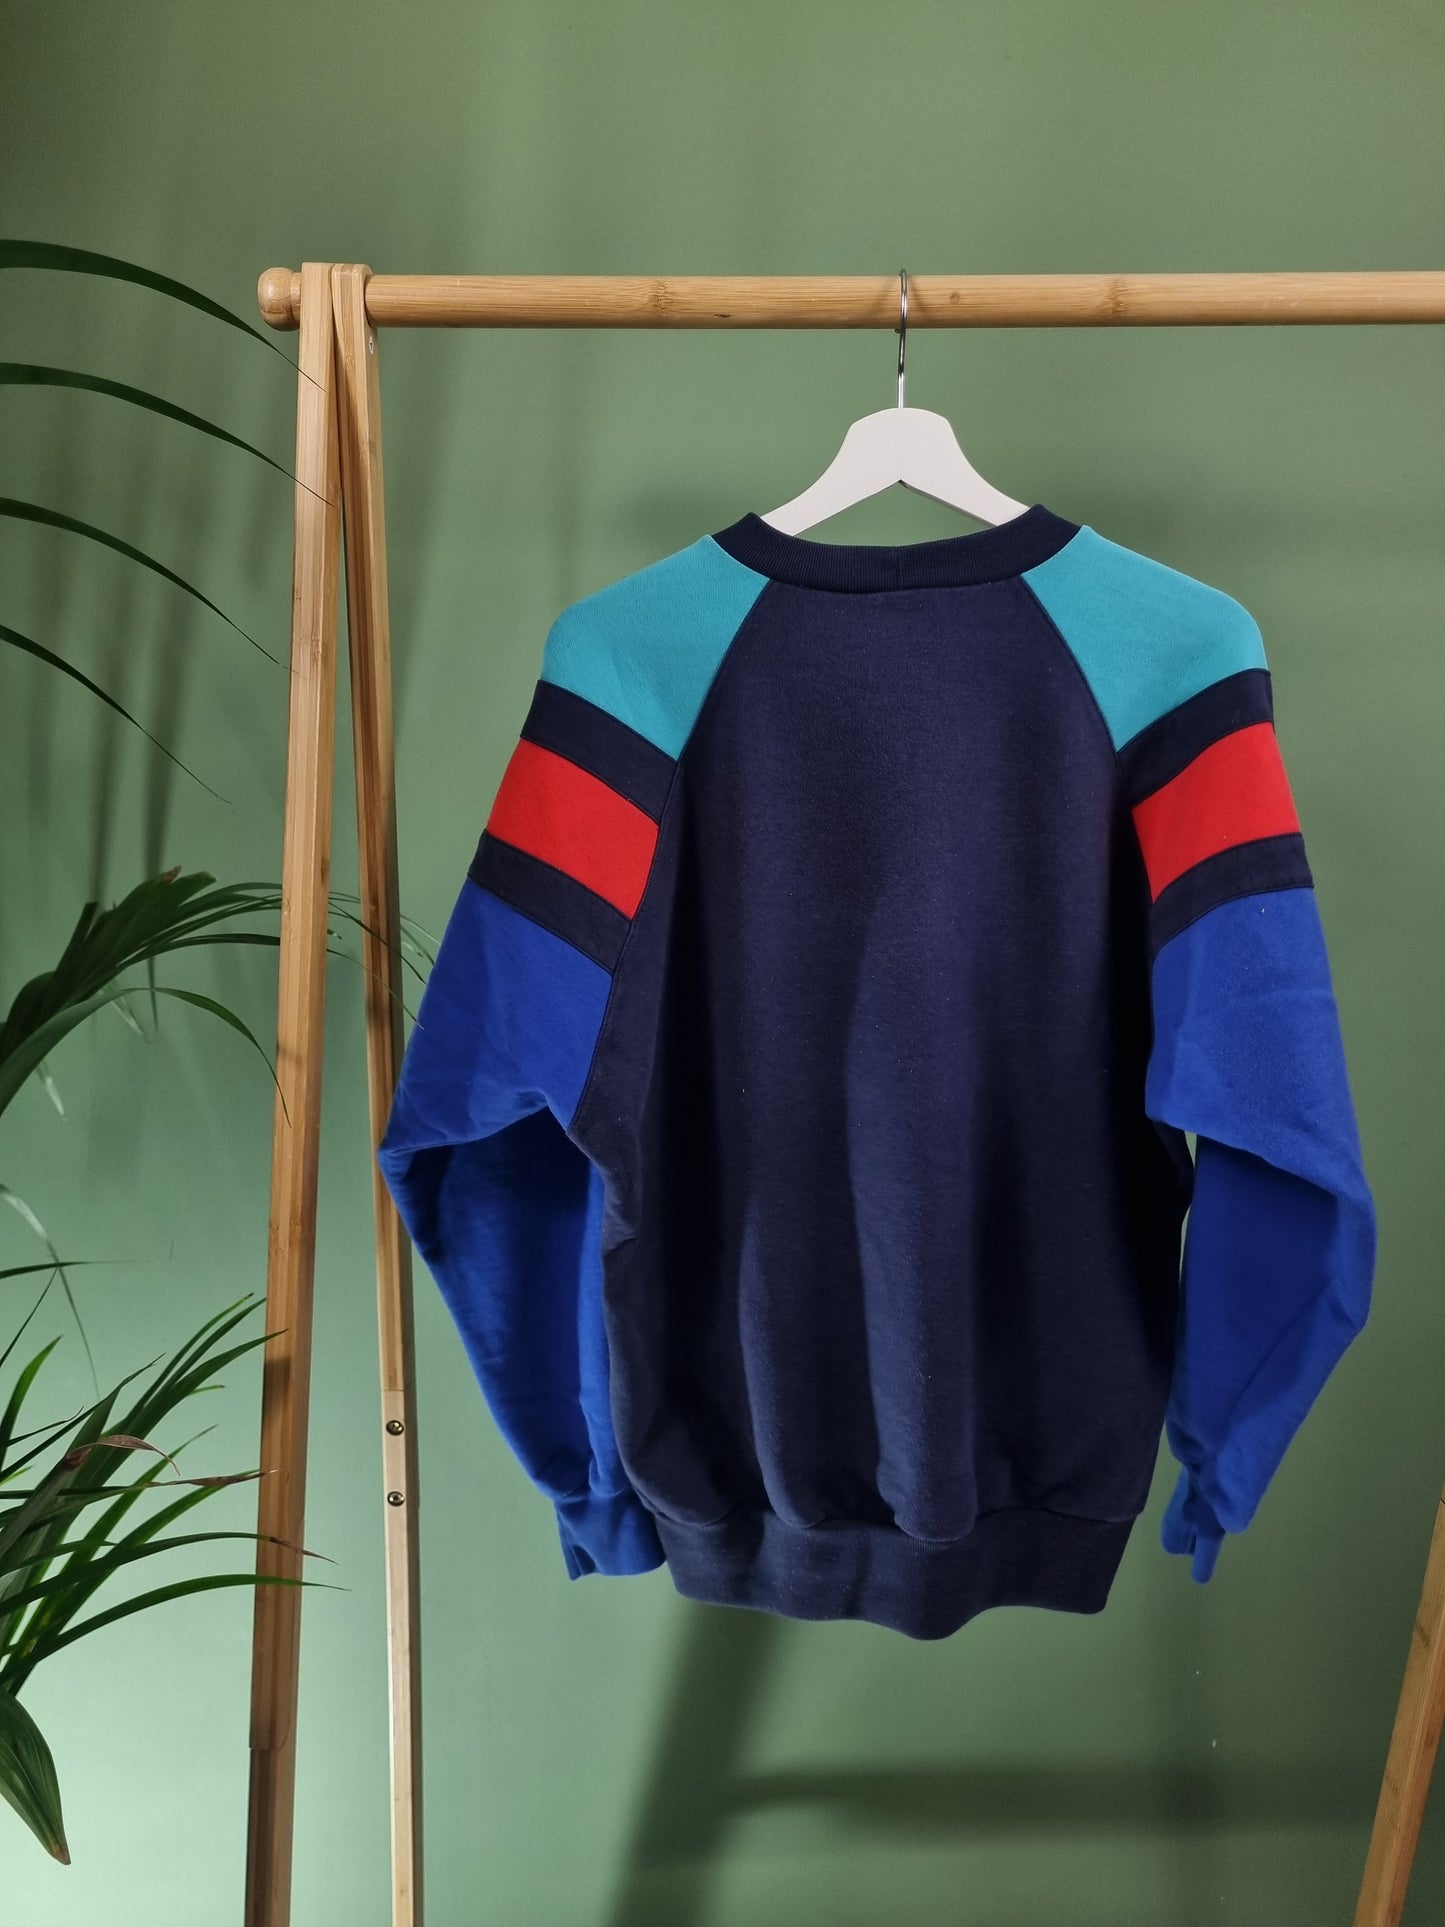 Adidas 80s chest logo sweater maat M